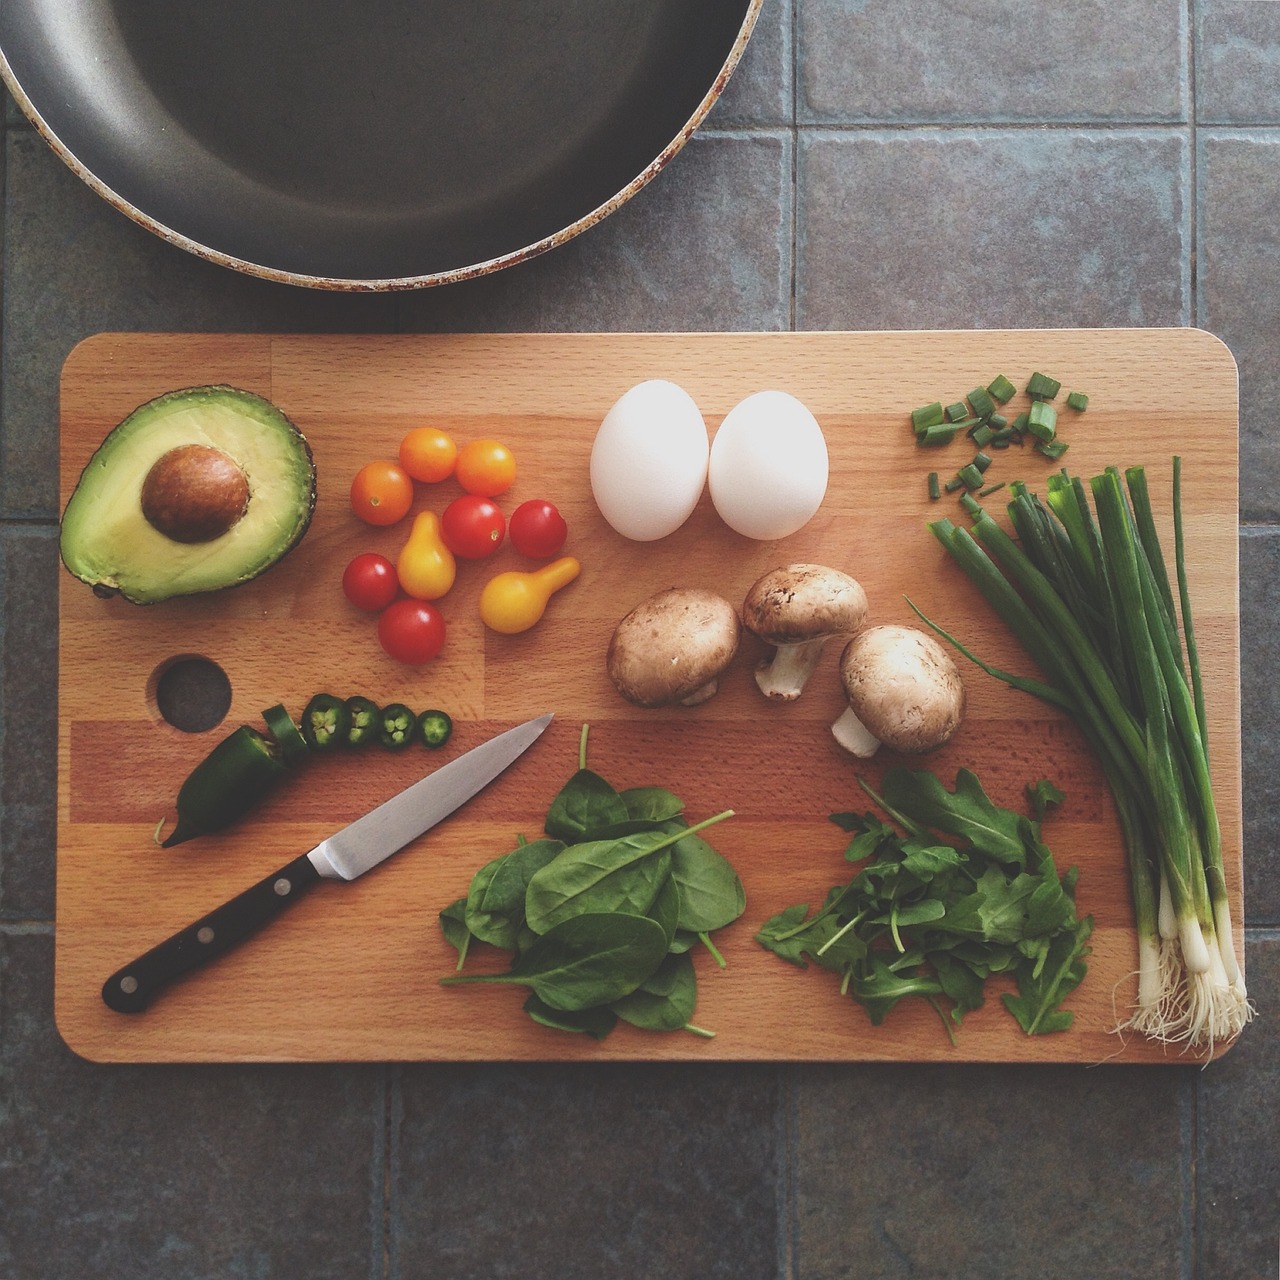 Chopping board setup: Capture a scene of food preparation